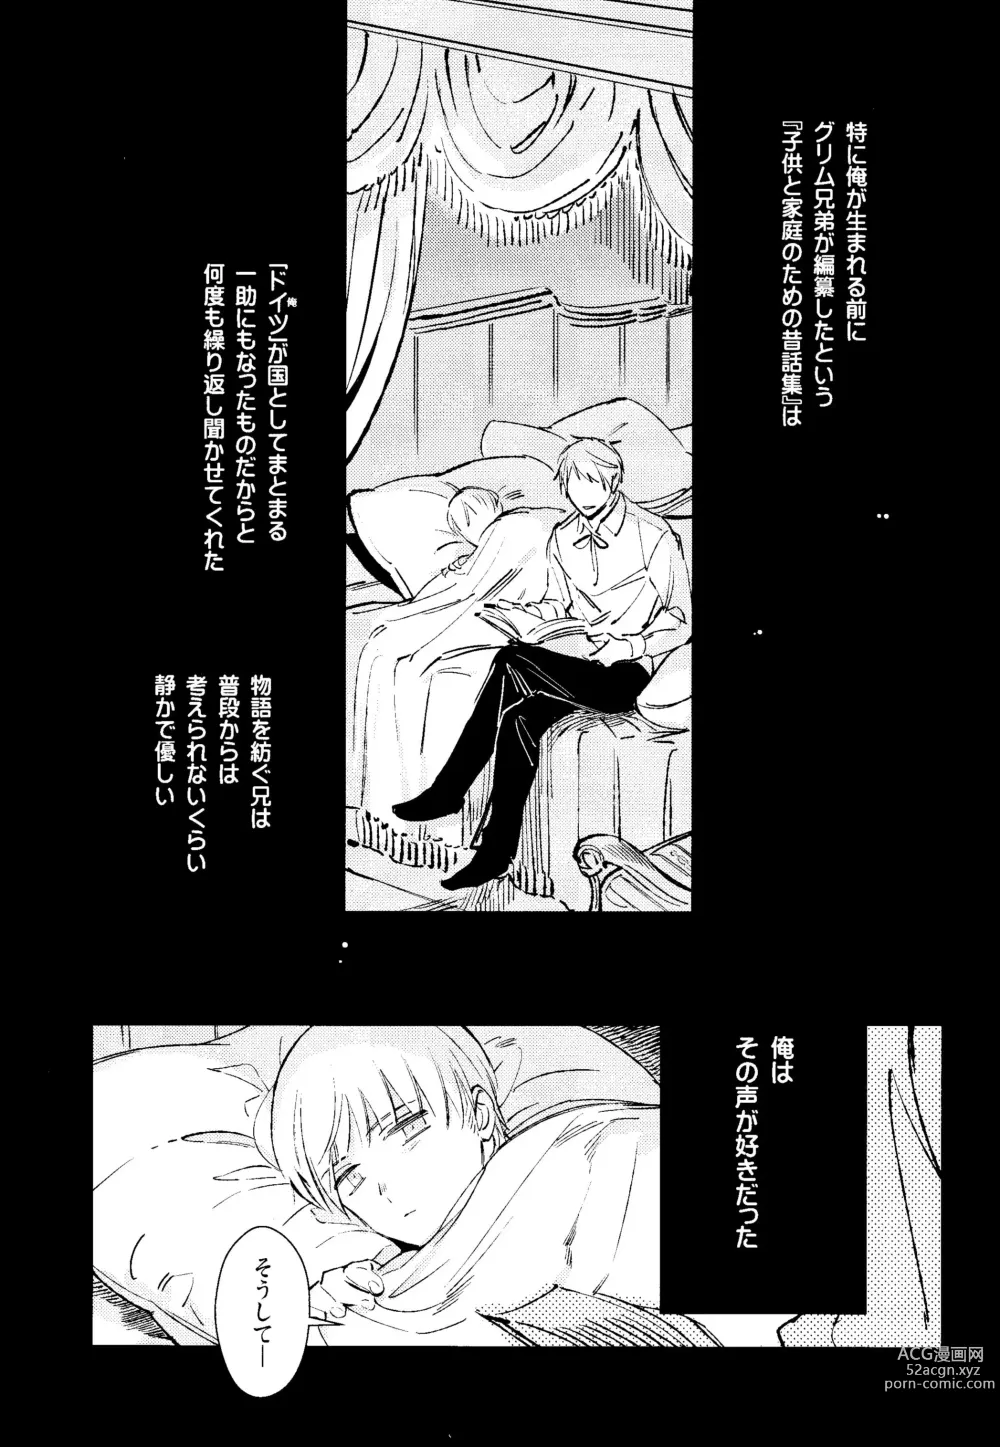 Page 3 of doujinshi Toge